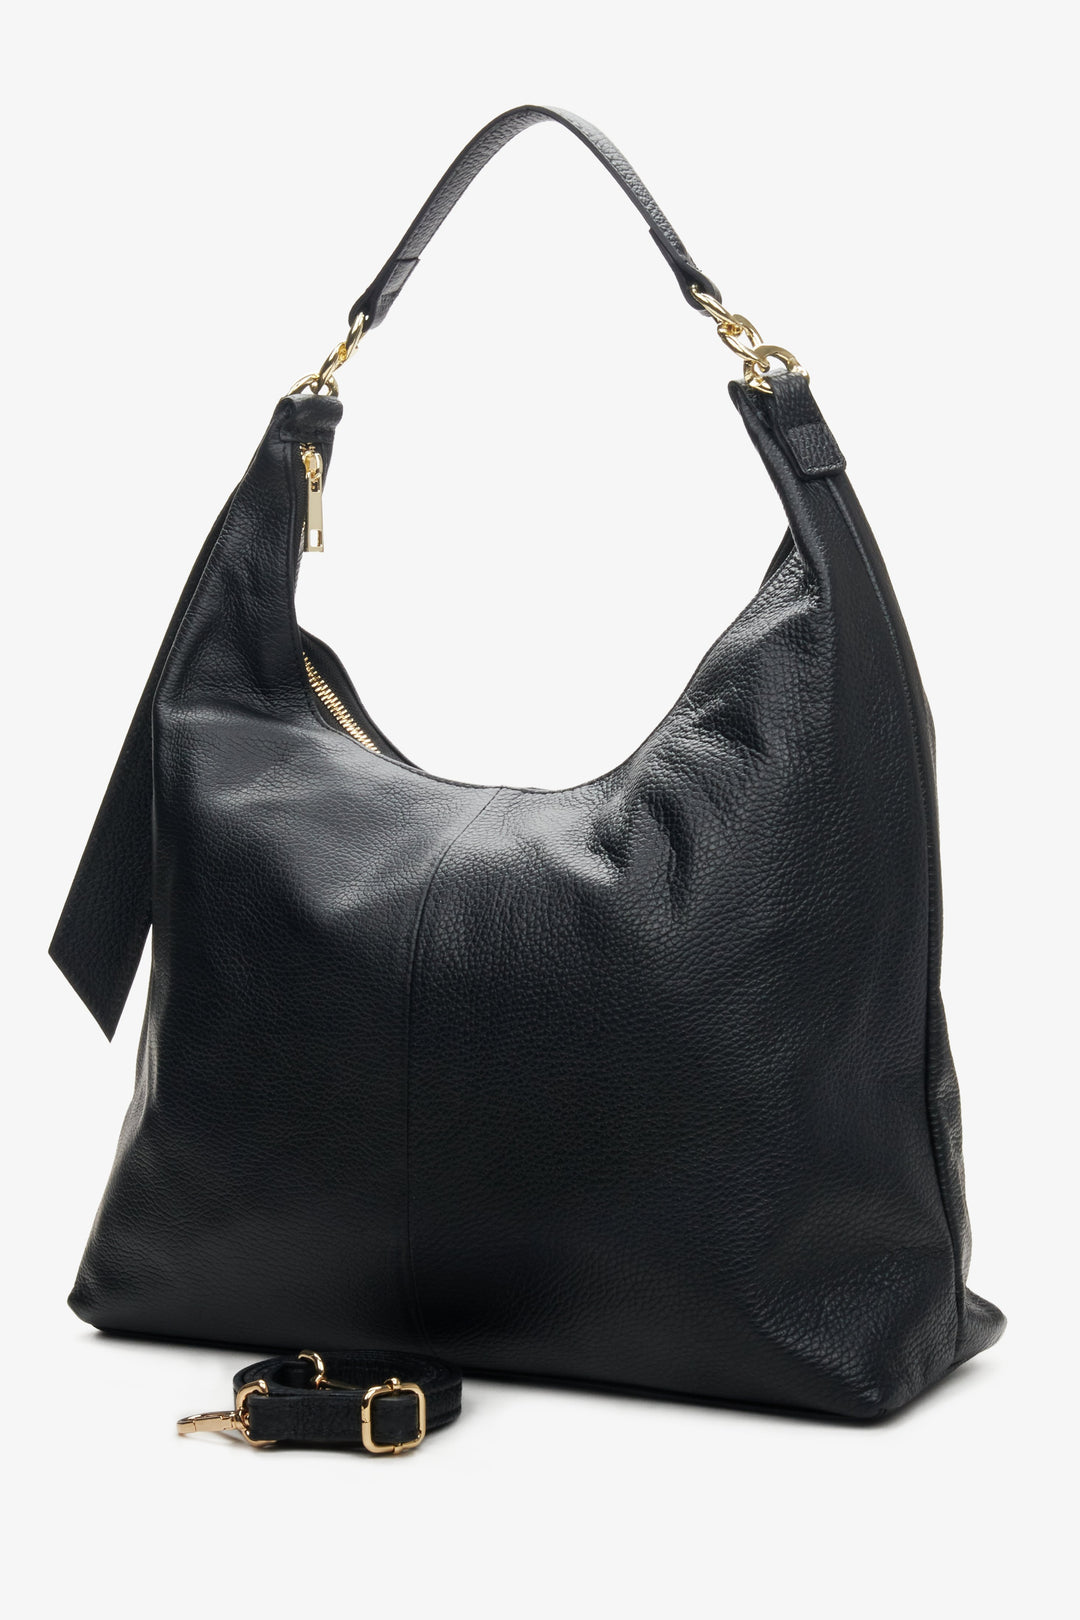 Women's leather black shopper bag of the Estro brand.